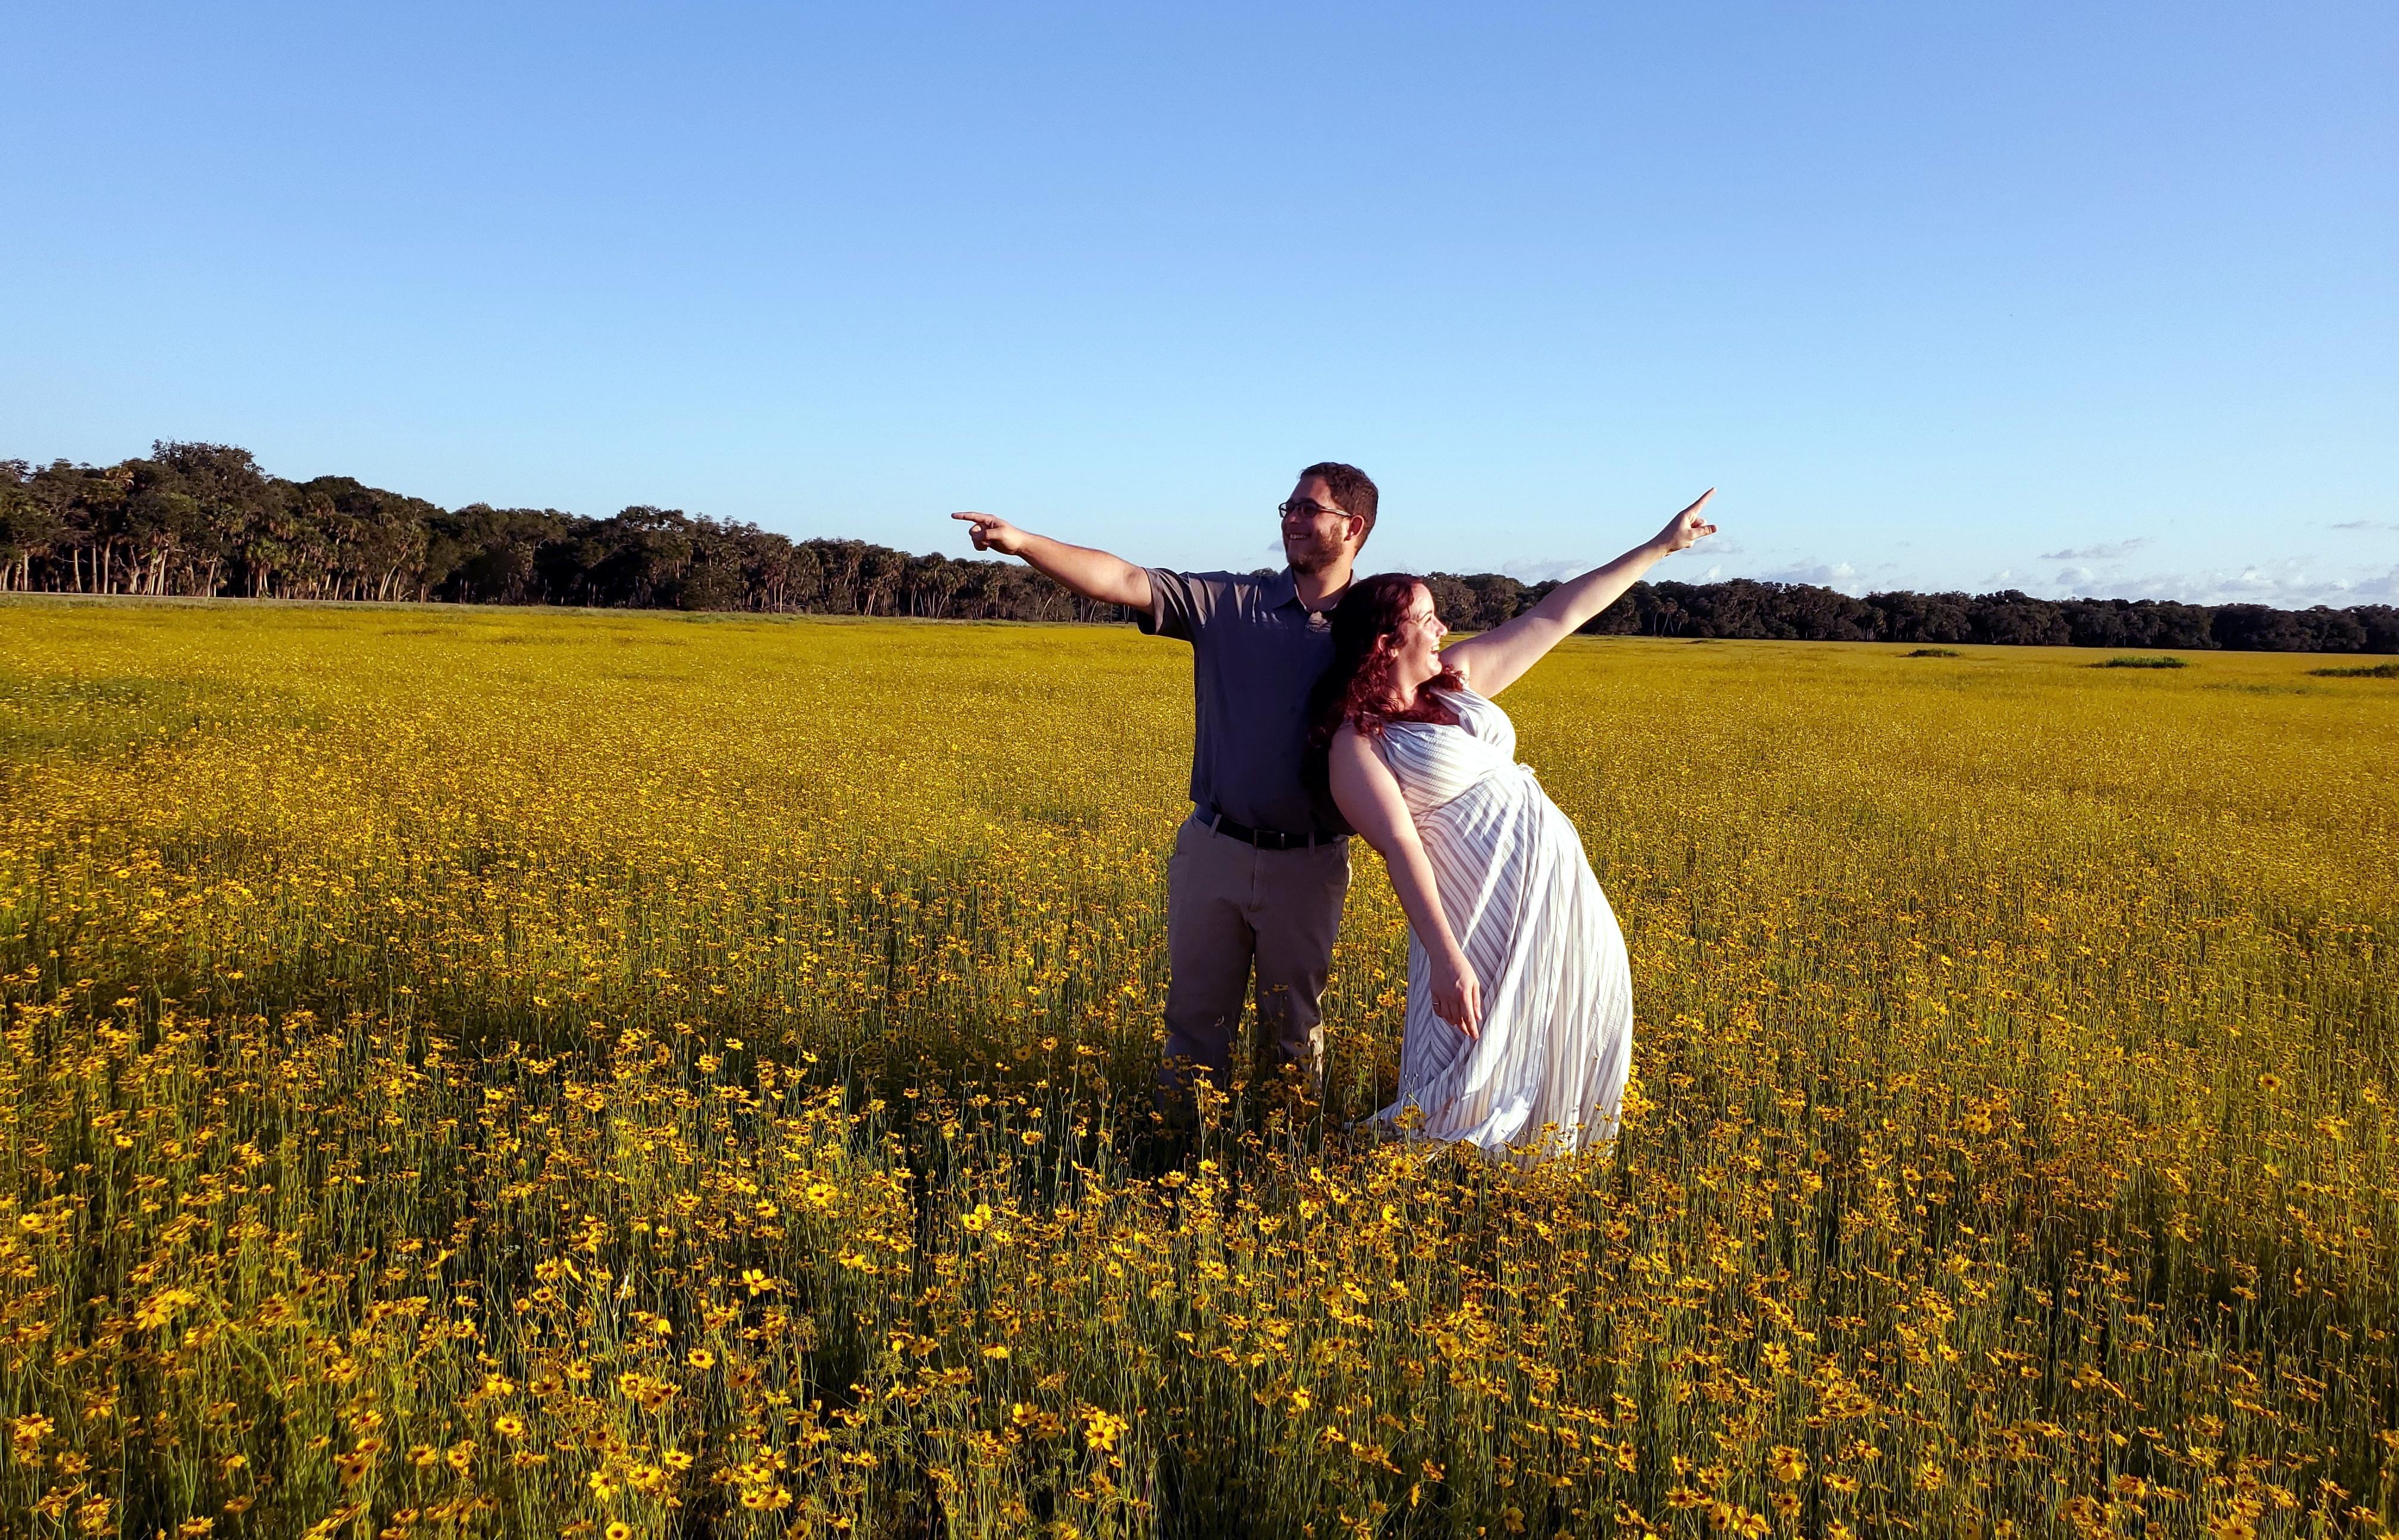 The Wedding Website of Holly Hurlbutt and Ryan Fox